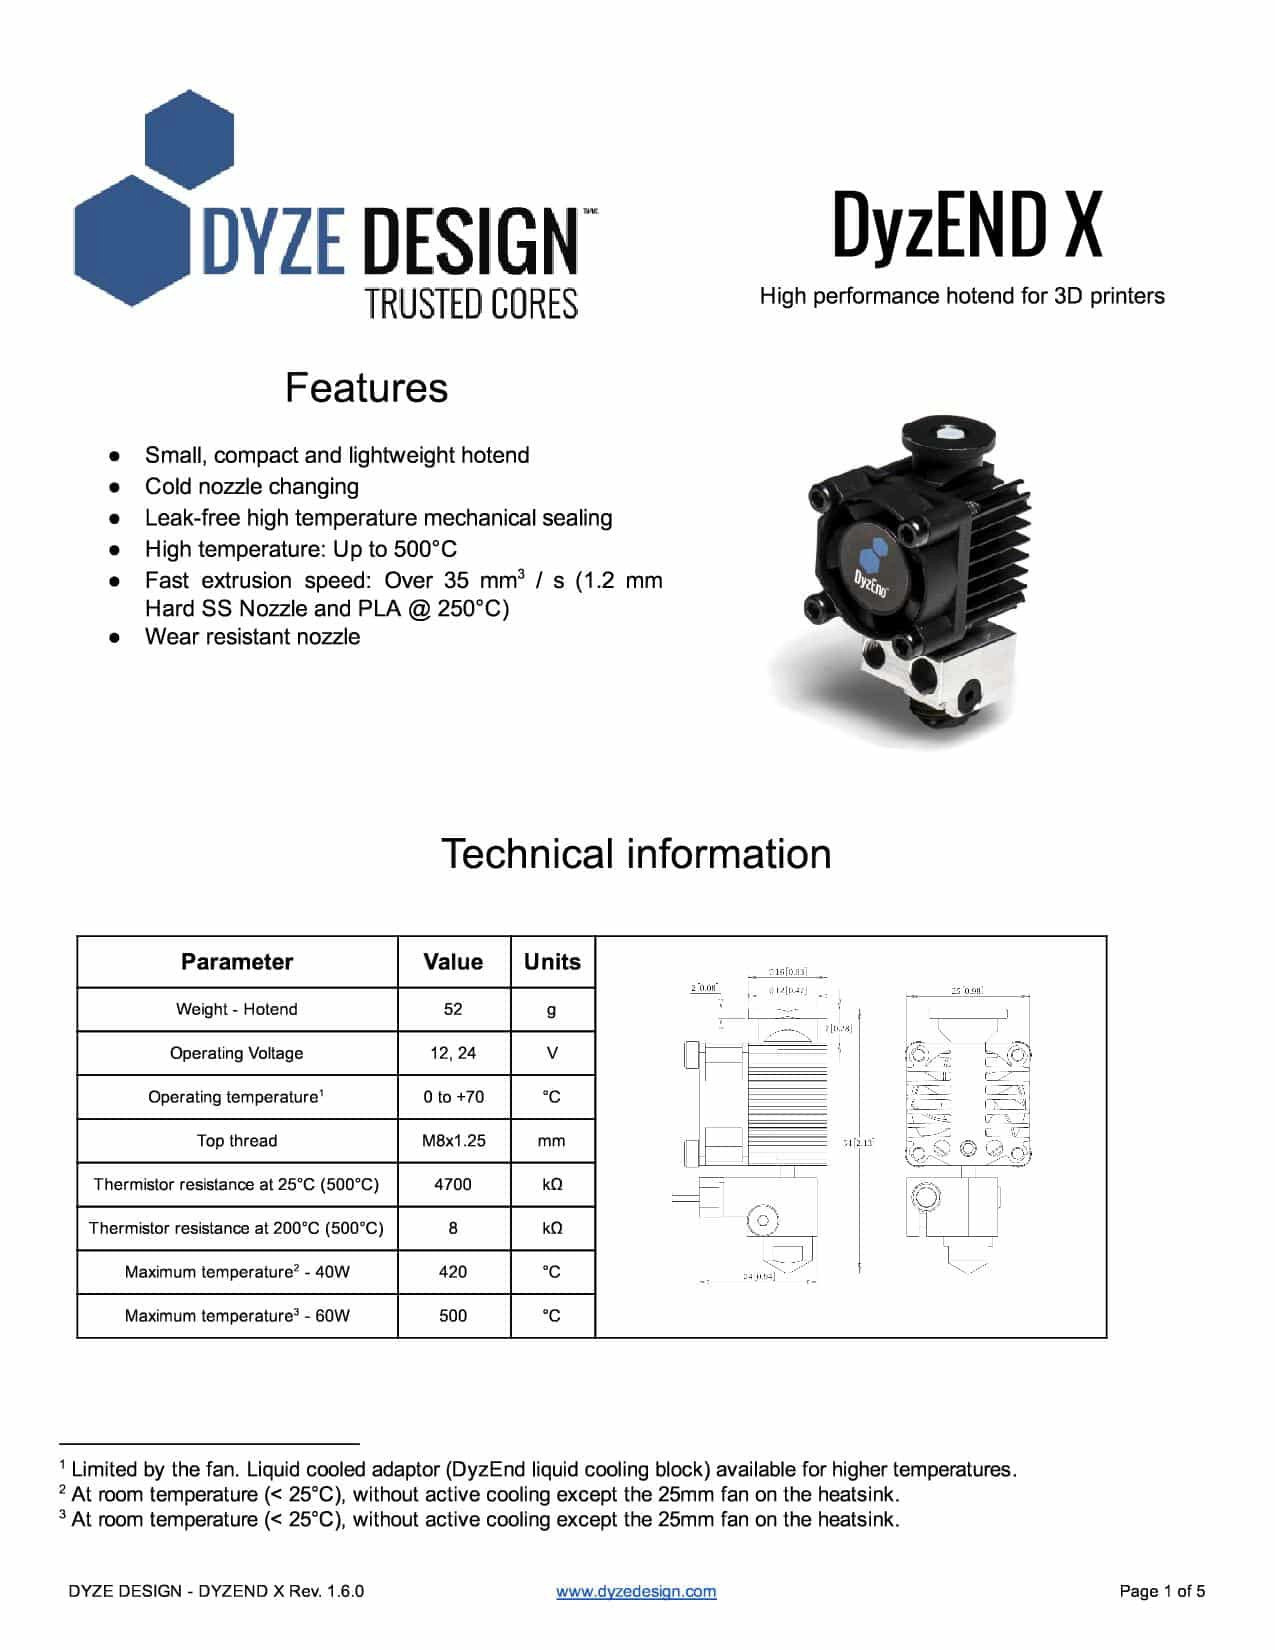 DyzEND-X HotEnd Specification